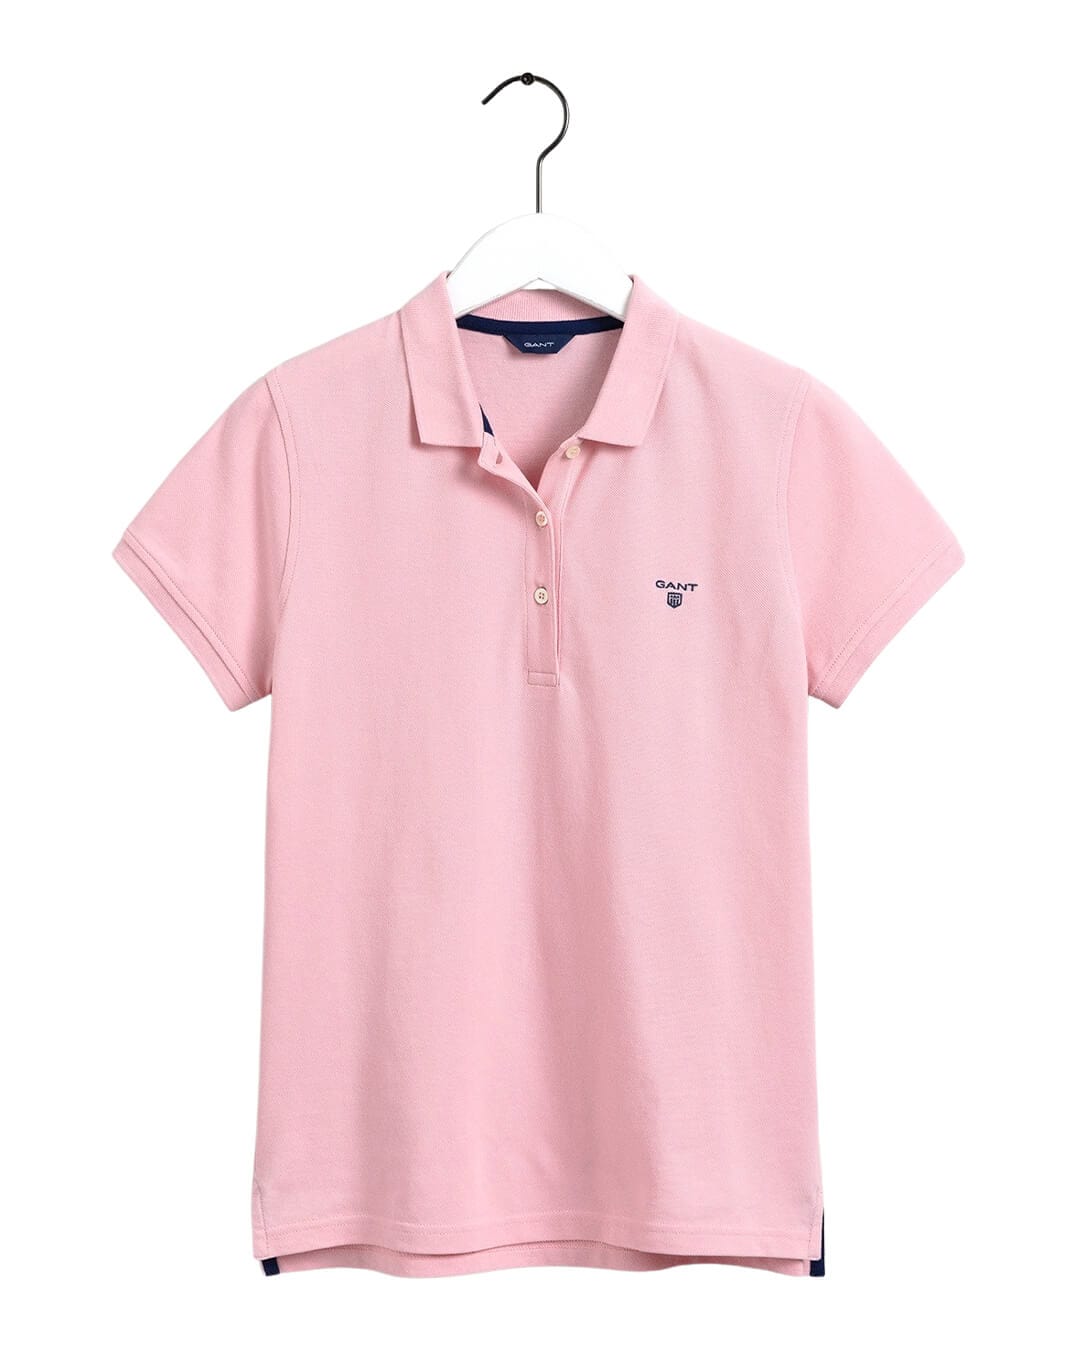 Gant Polo Shirts Gant Piqué Light Pink Polo Shirt